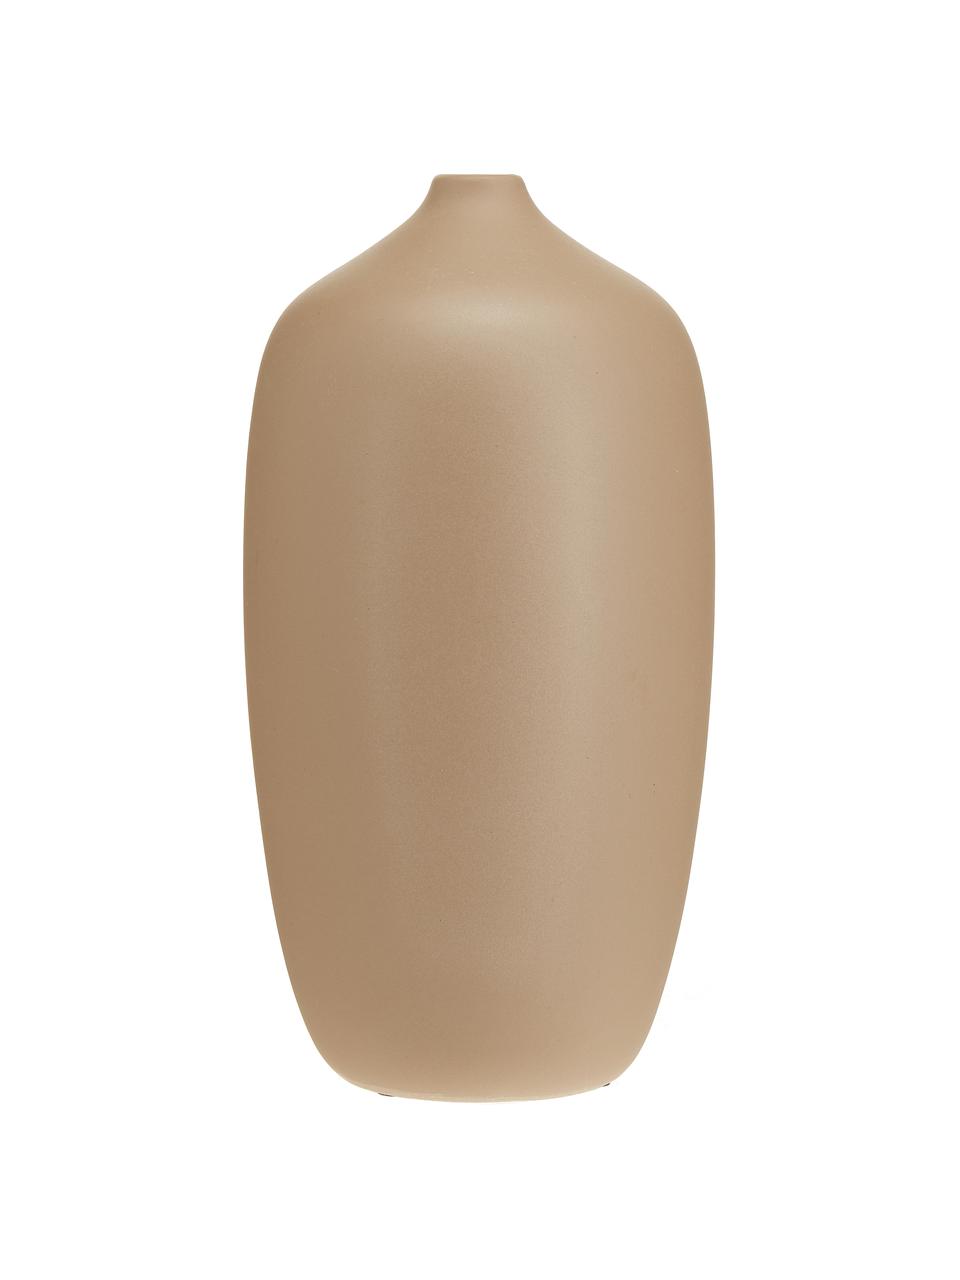 Grosse Keramik-Vase Ceola, Keramik, Beige, Ø 13 x H 25 cm